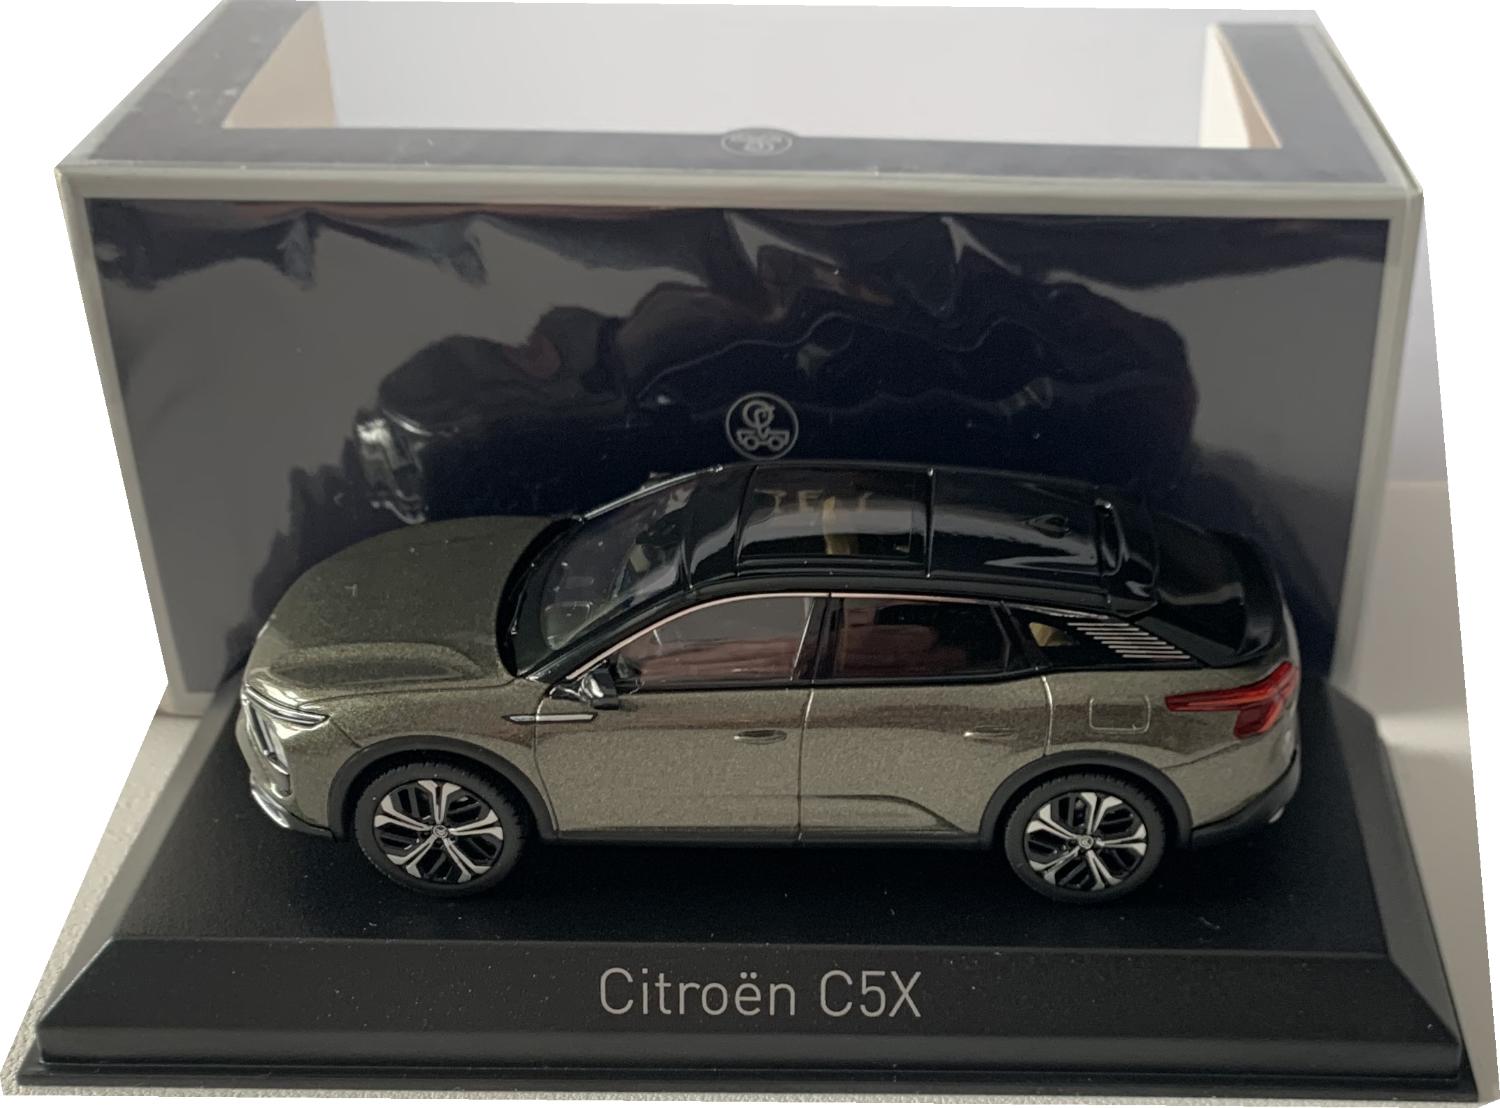 Citroen C5X 2021 in amazonite grey 1:43 scale model from Norev, 155571